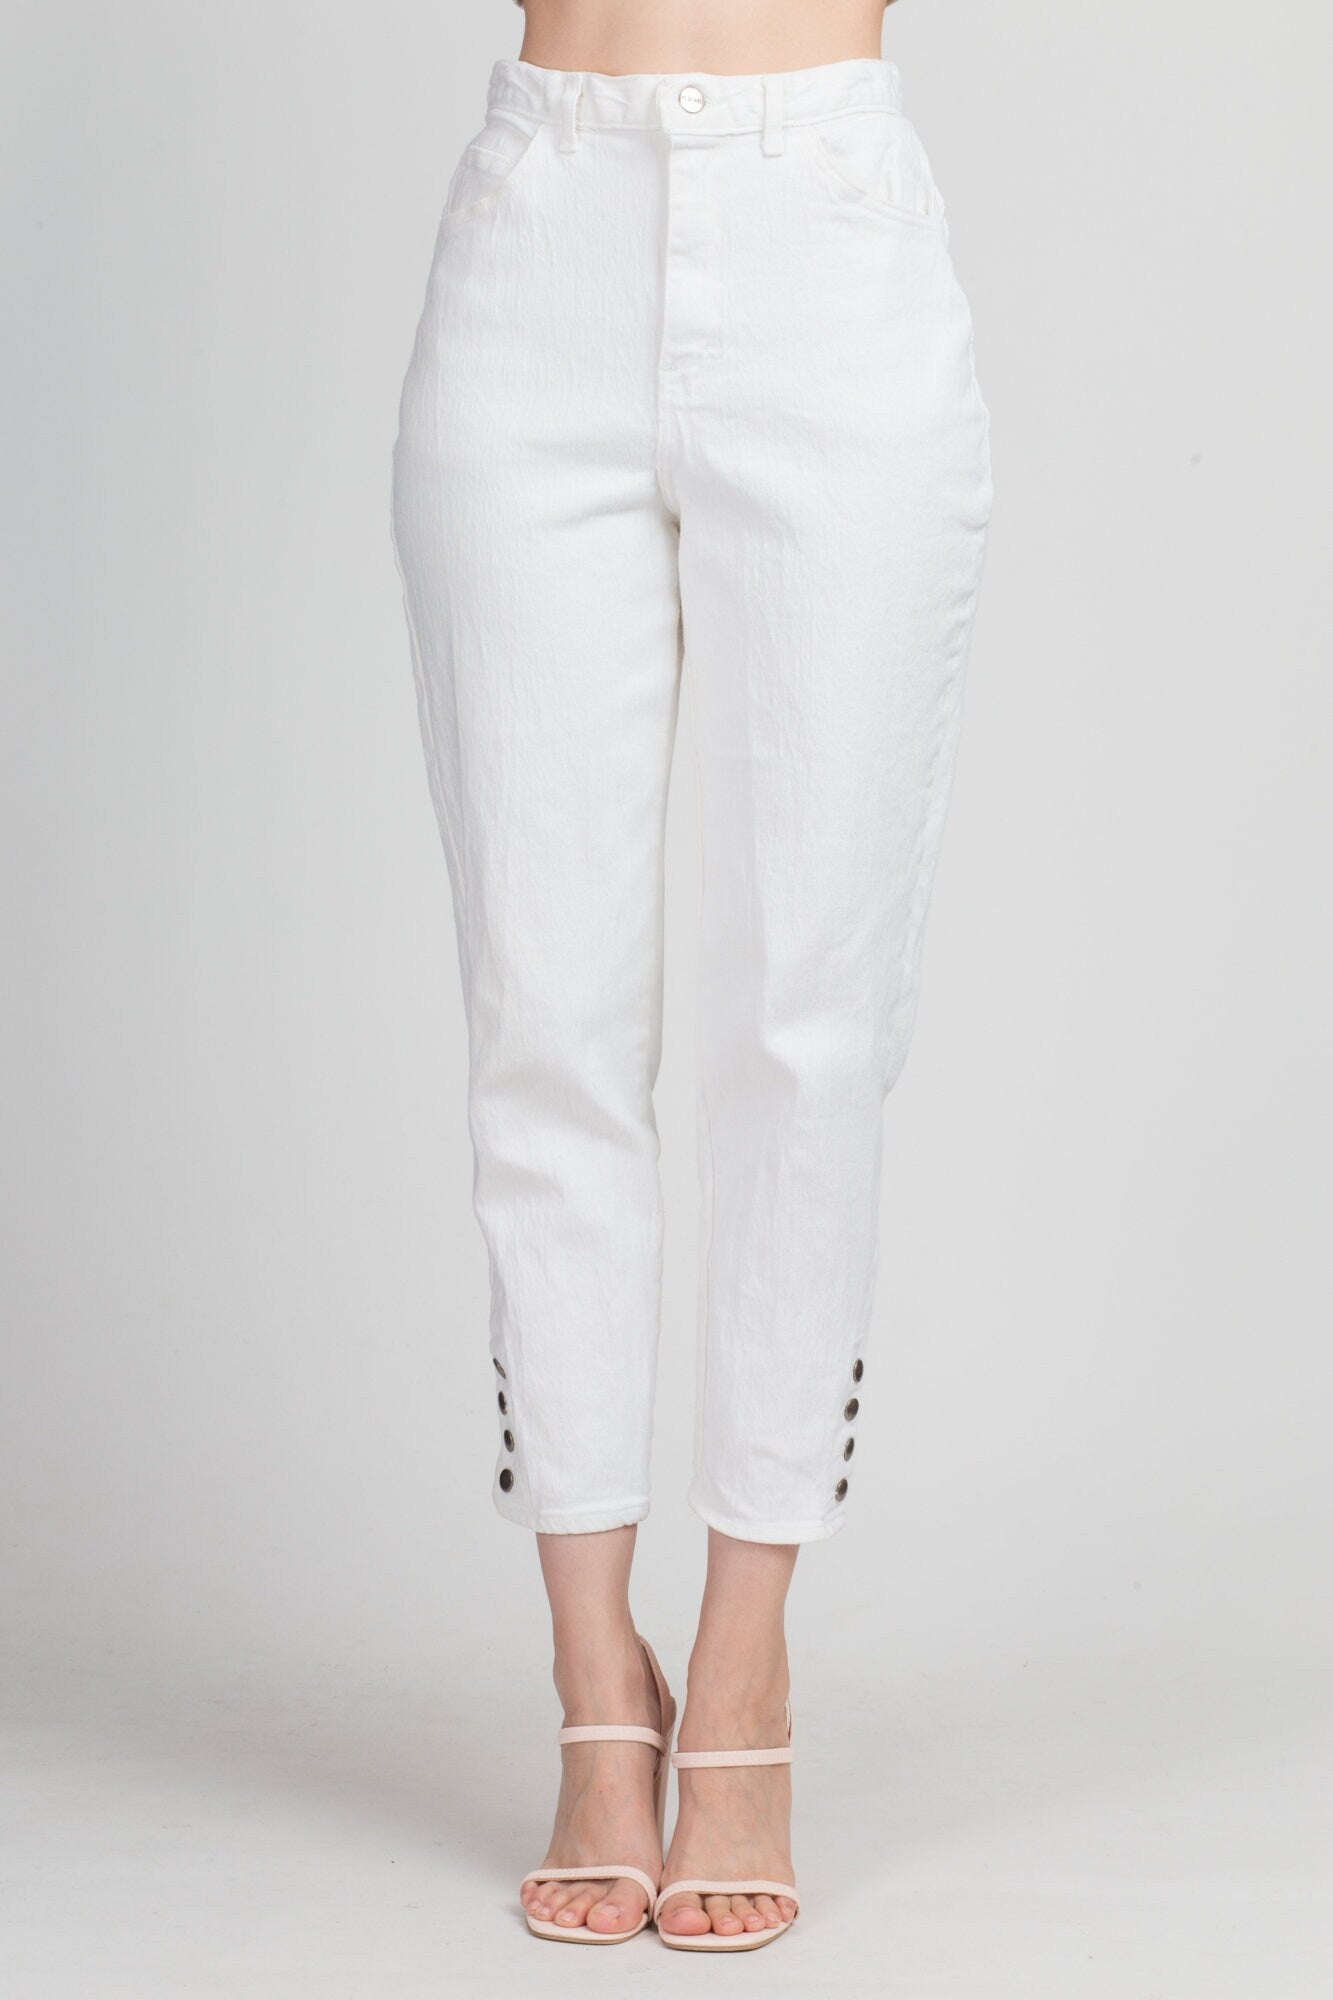 90s White High Waist Stretchy Mom Jeans - Medium, 28" 